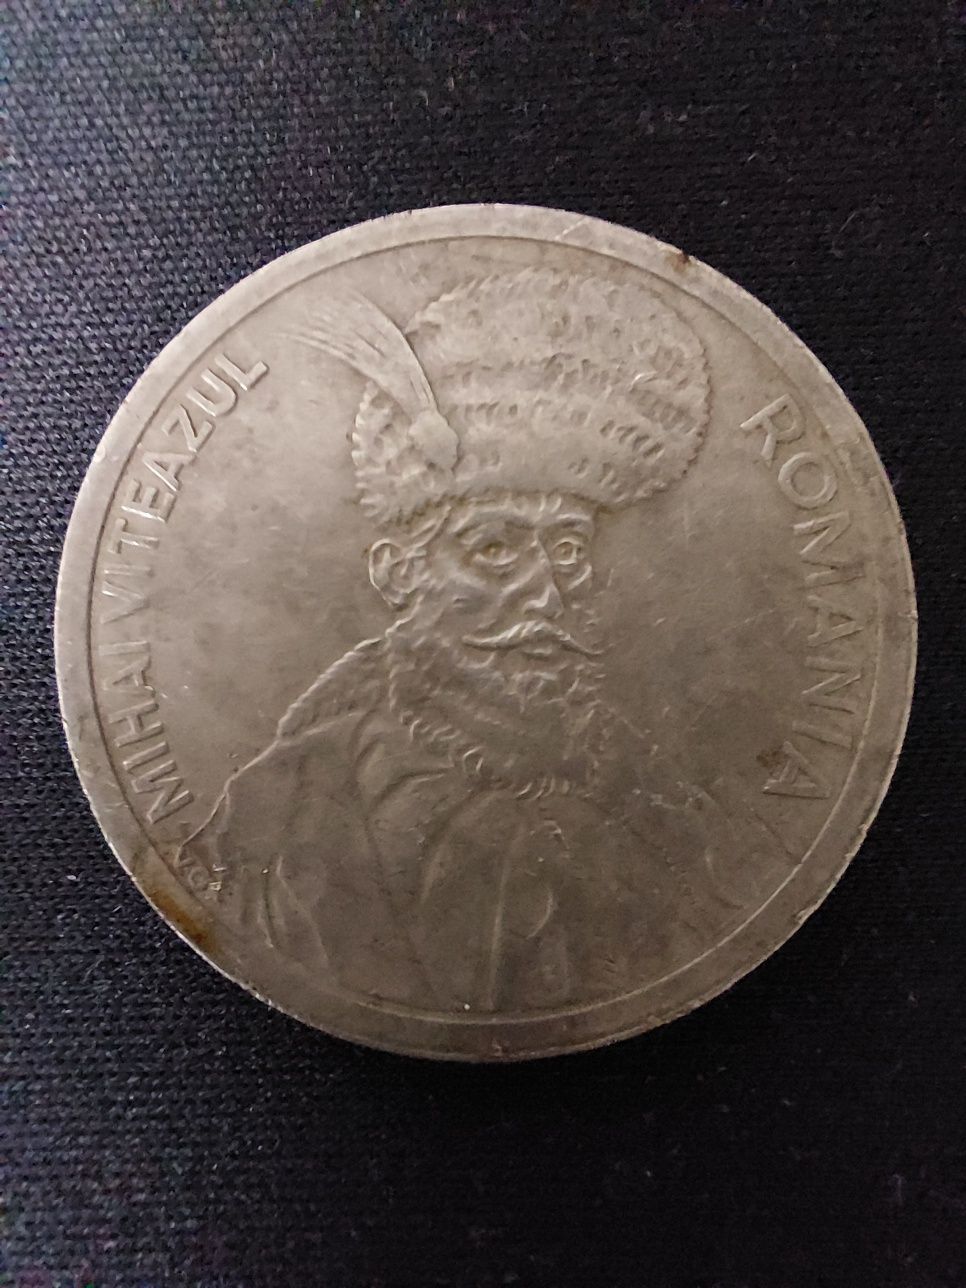 Moneda 100 lei 1995